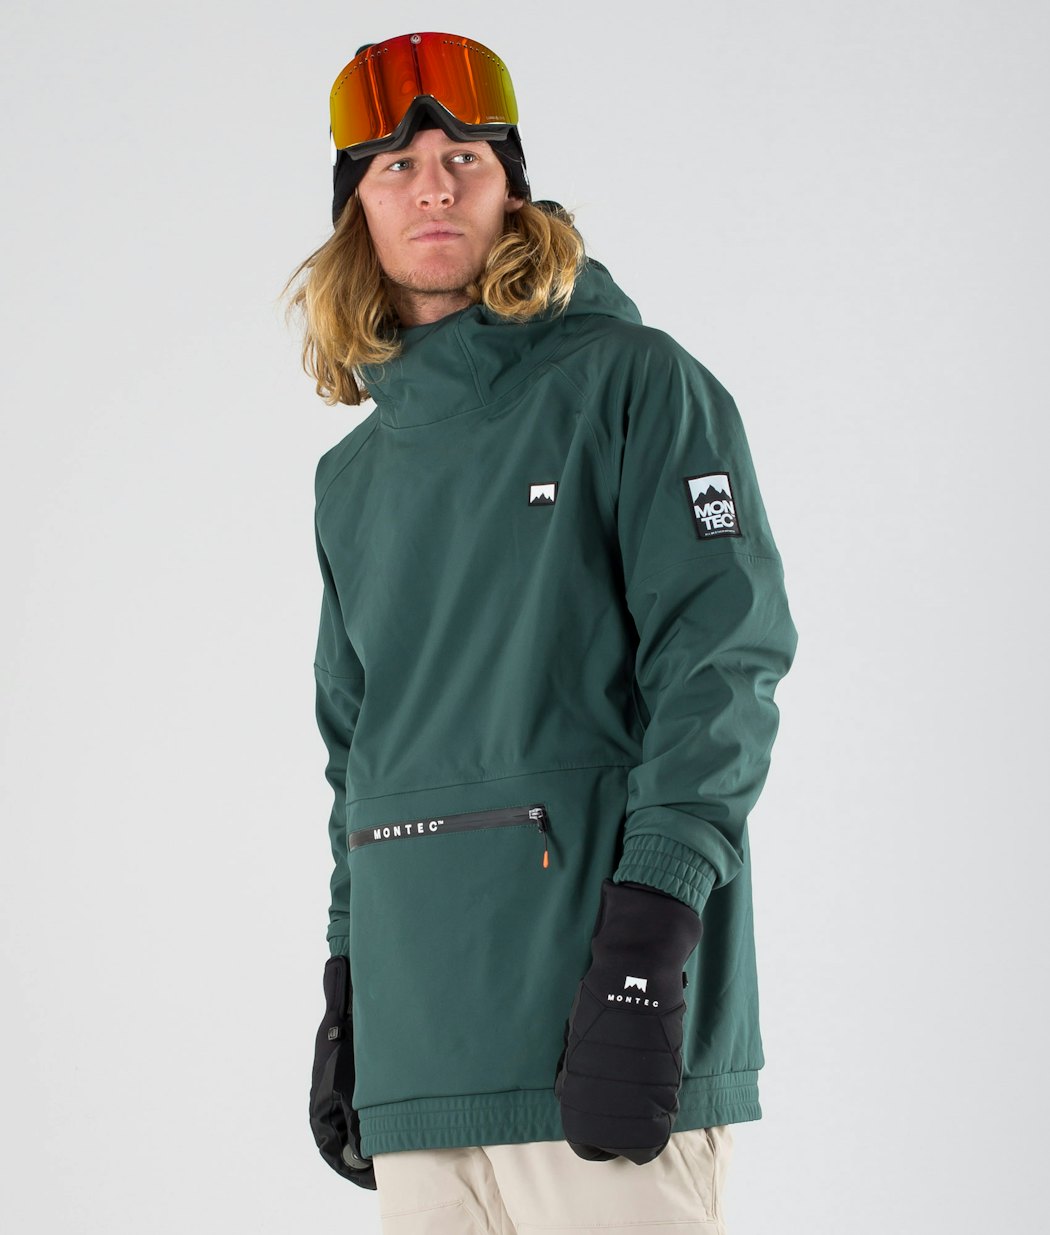 Tempest 2019 Snowboard Jacket Men Dark Atlantic